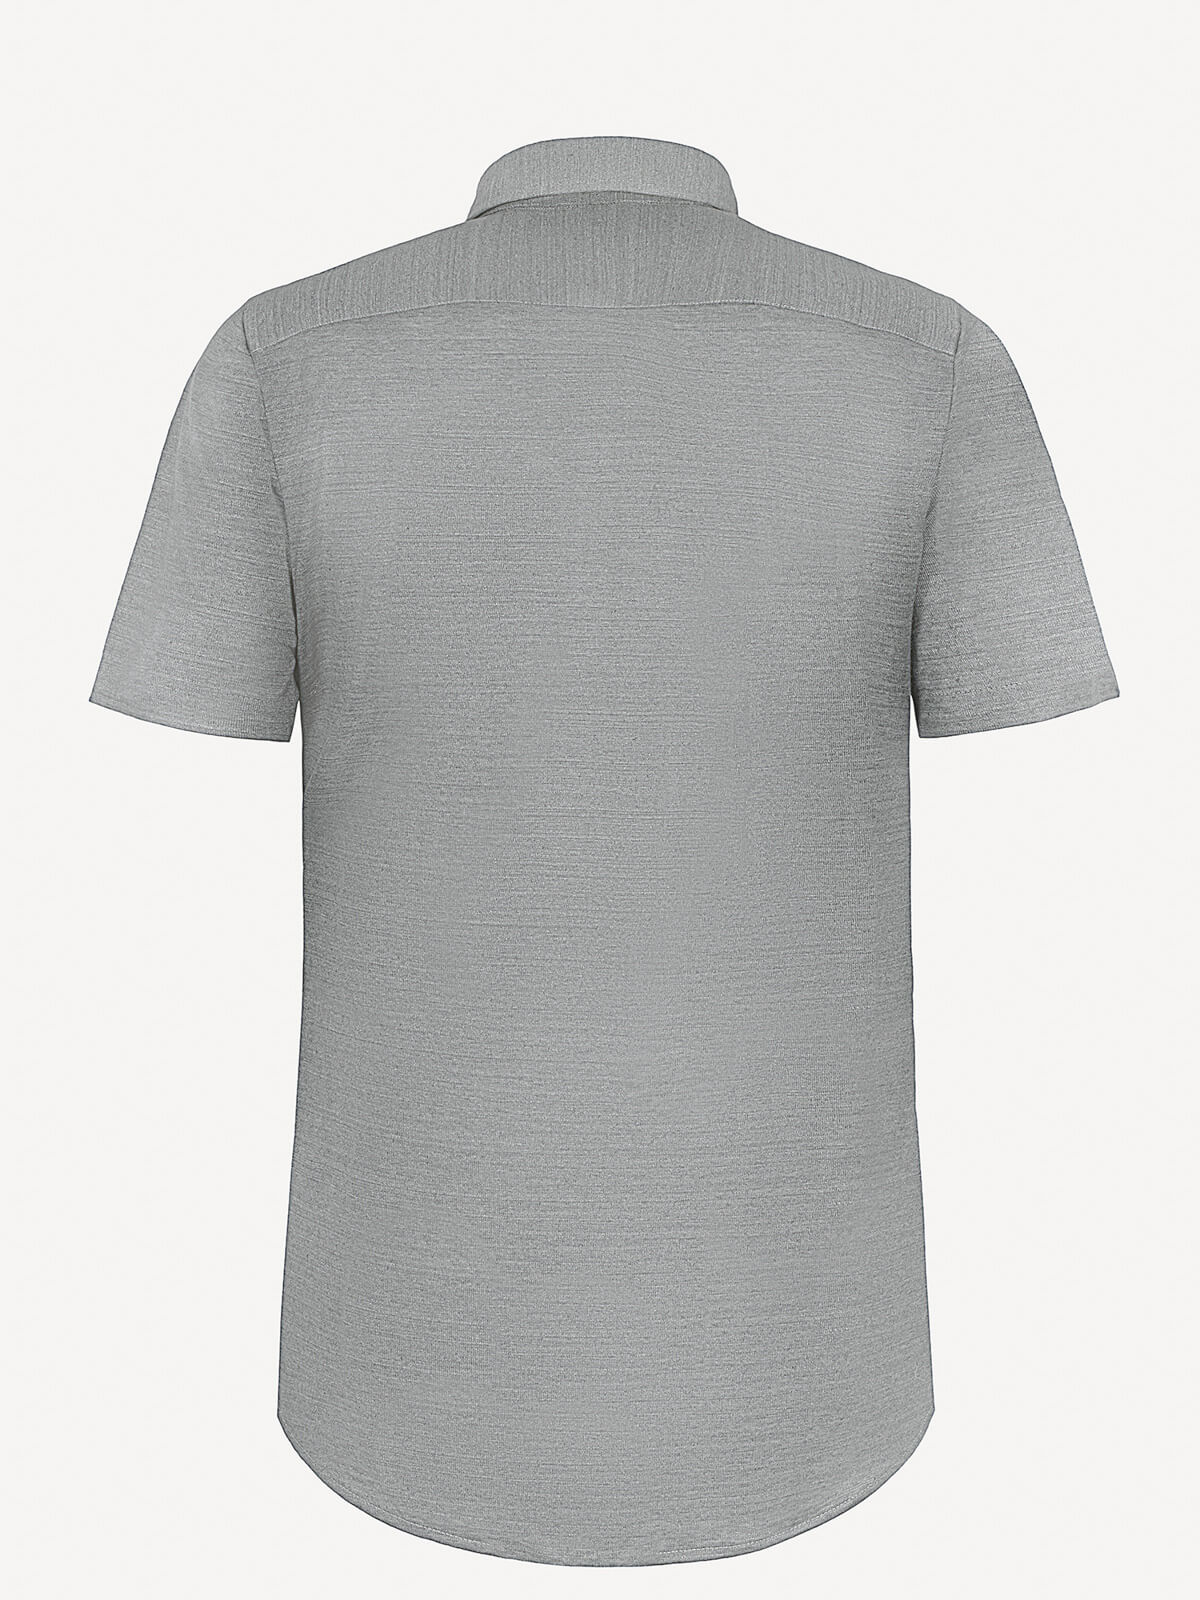 Camicia Short Sleeve back light grey 100% Capri